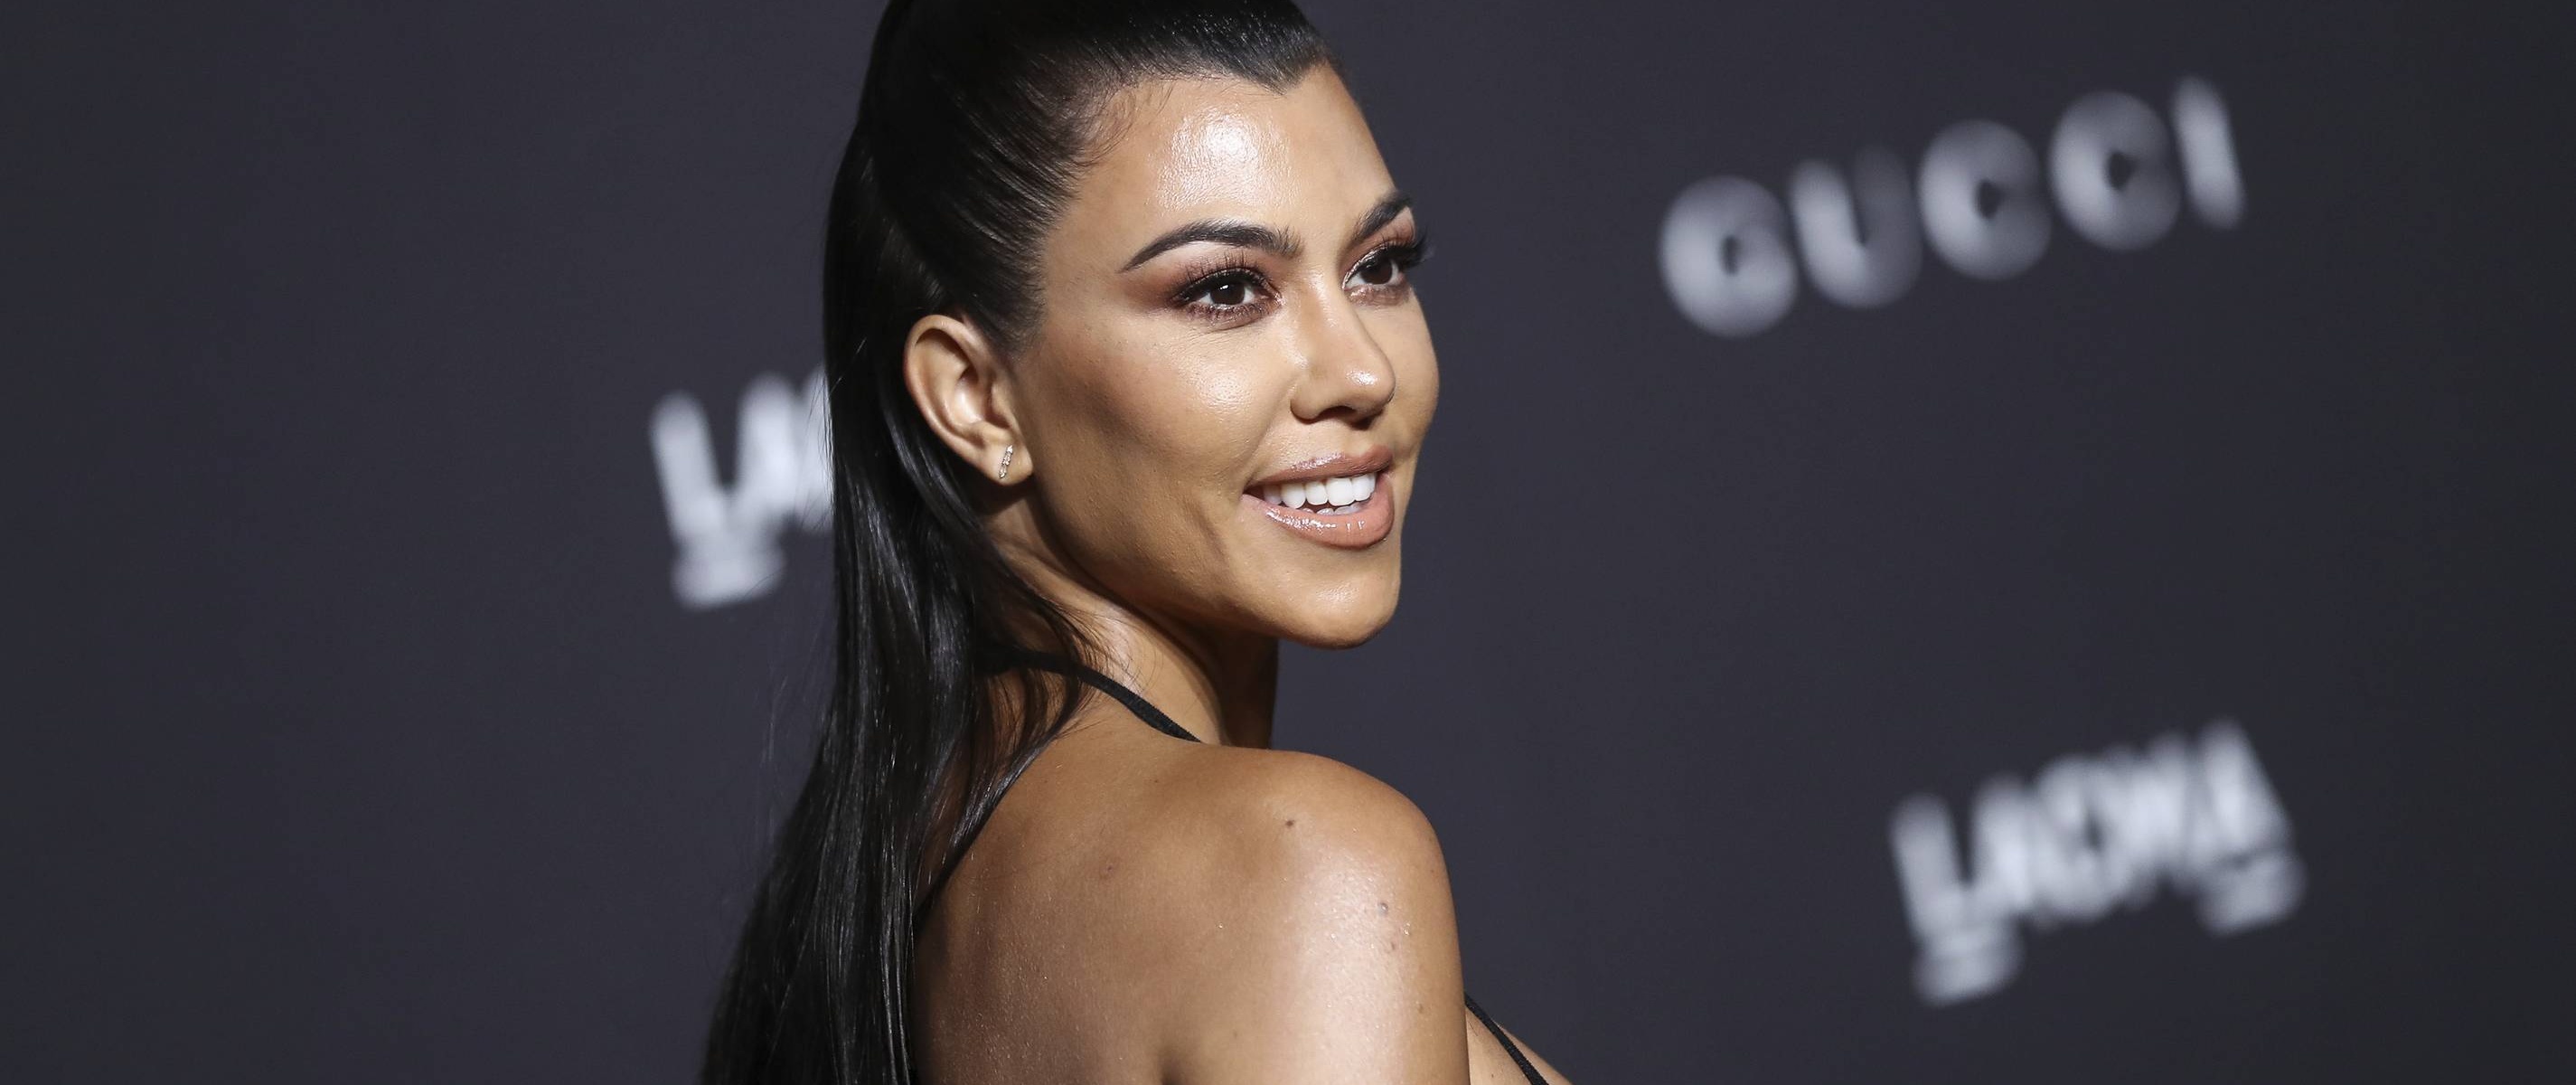 Kourtney Kardashian's Buys $12 Million Palm Springs Mansion